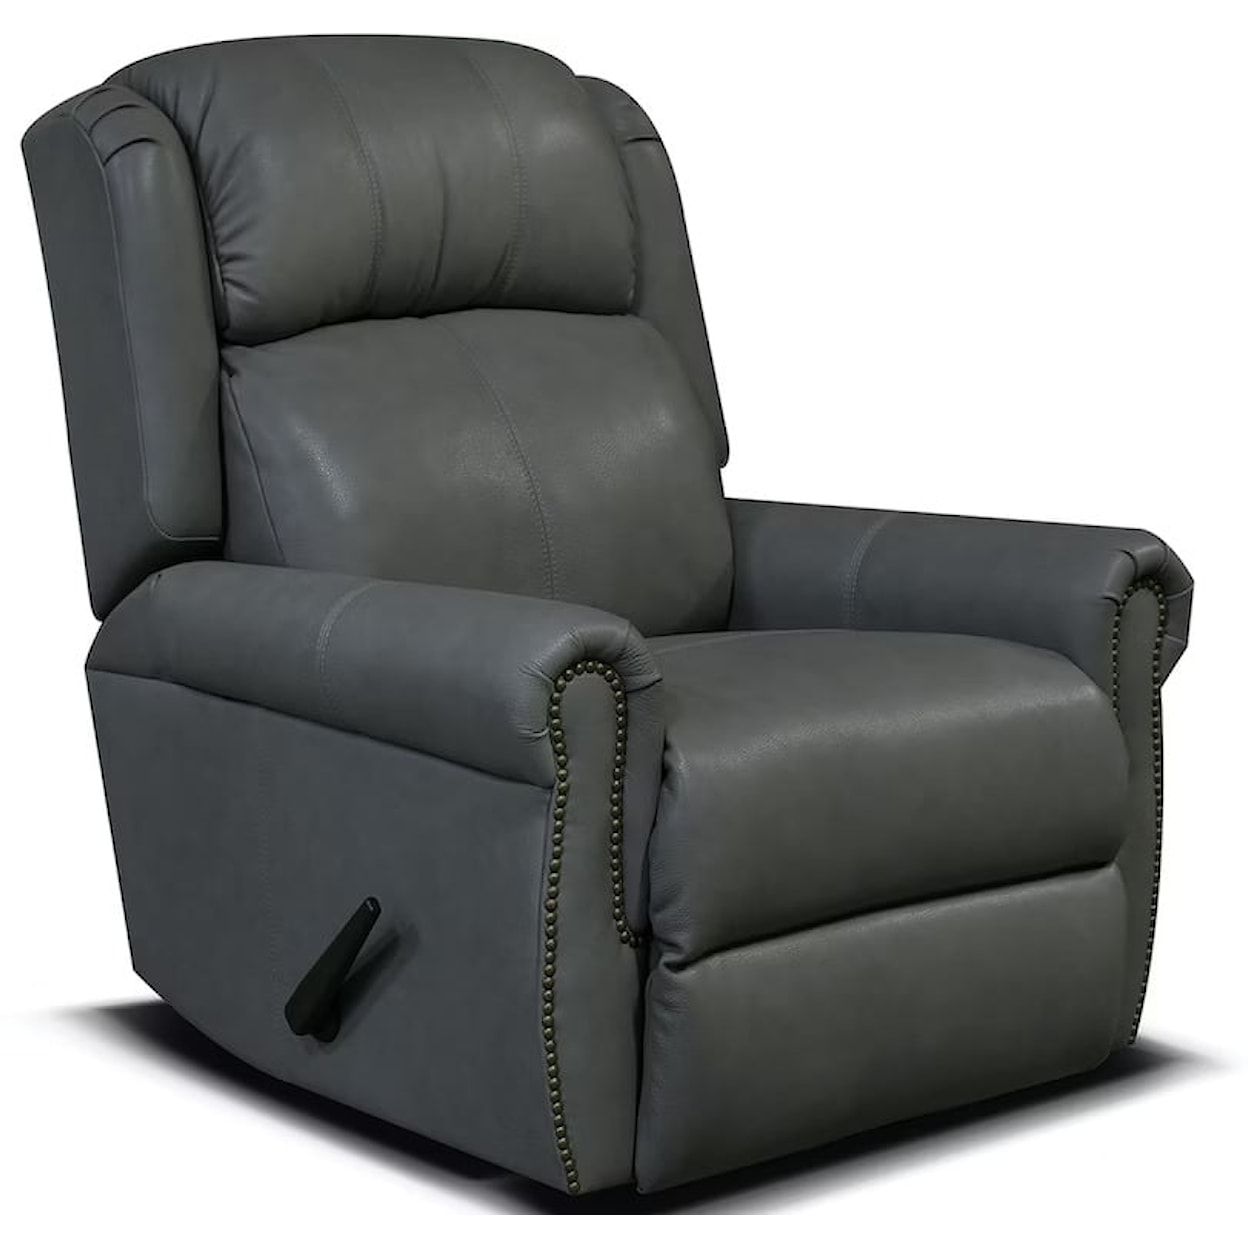 Tennessee Custom Upholstery EZ5H00/AL/N Series Leather Minimum Proximity Recliner